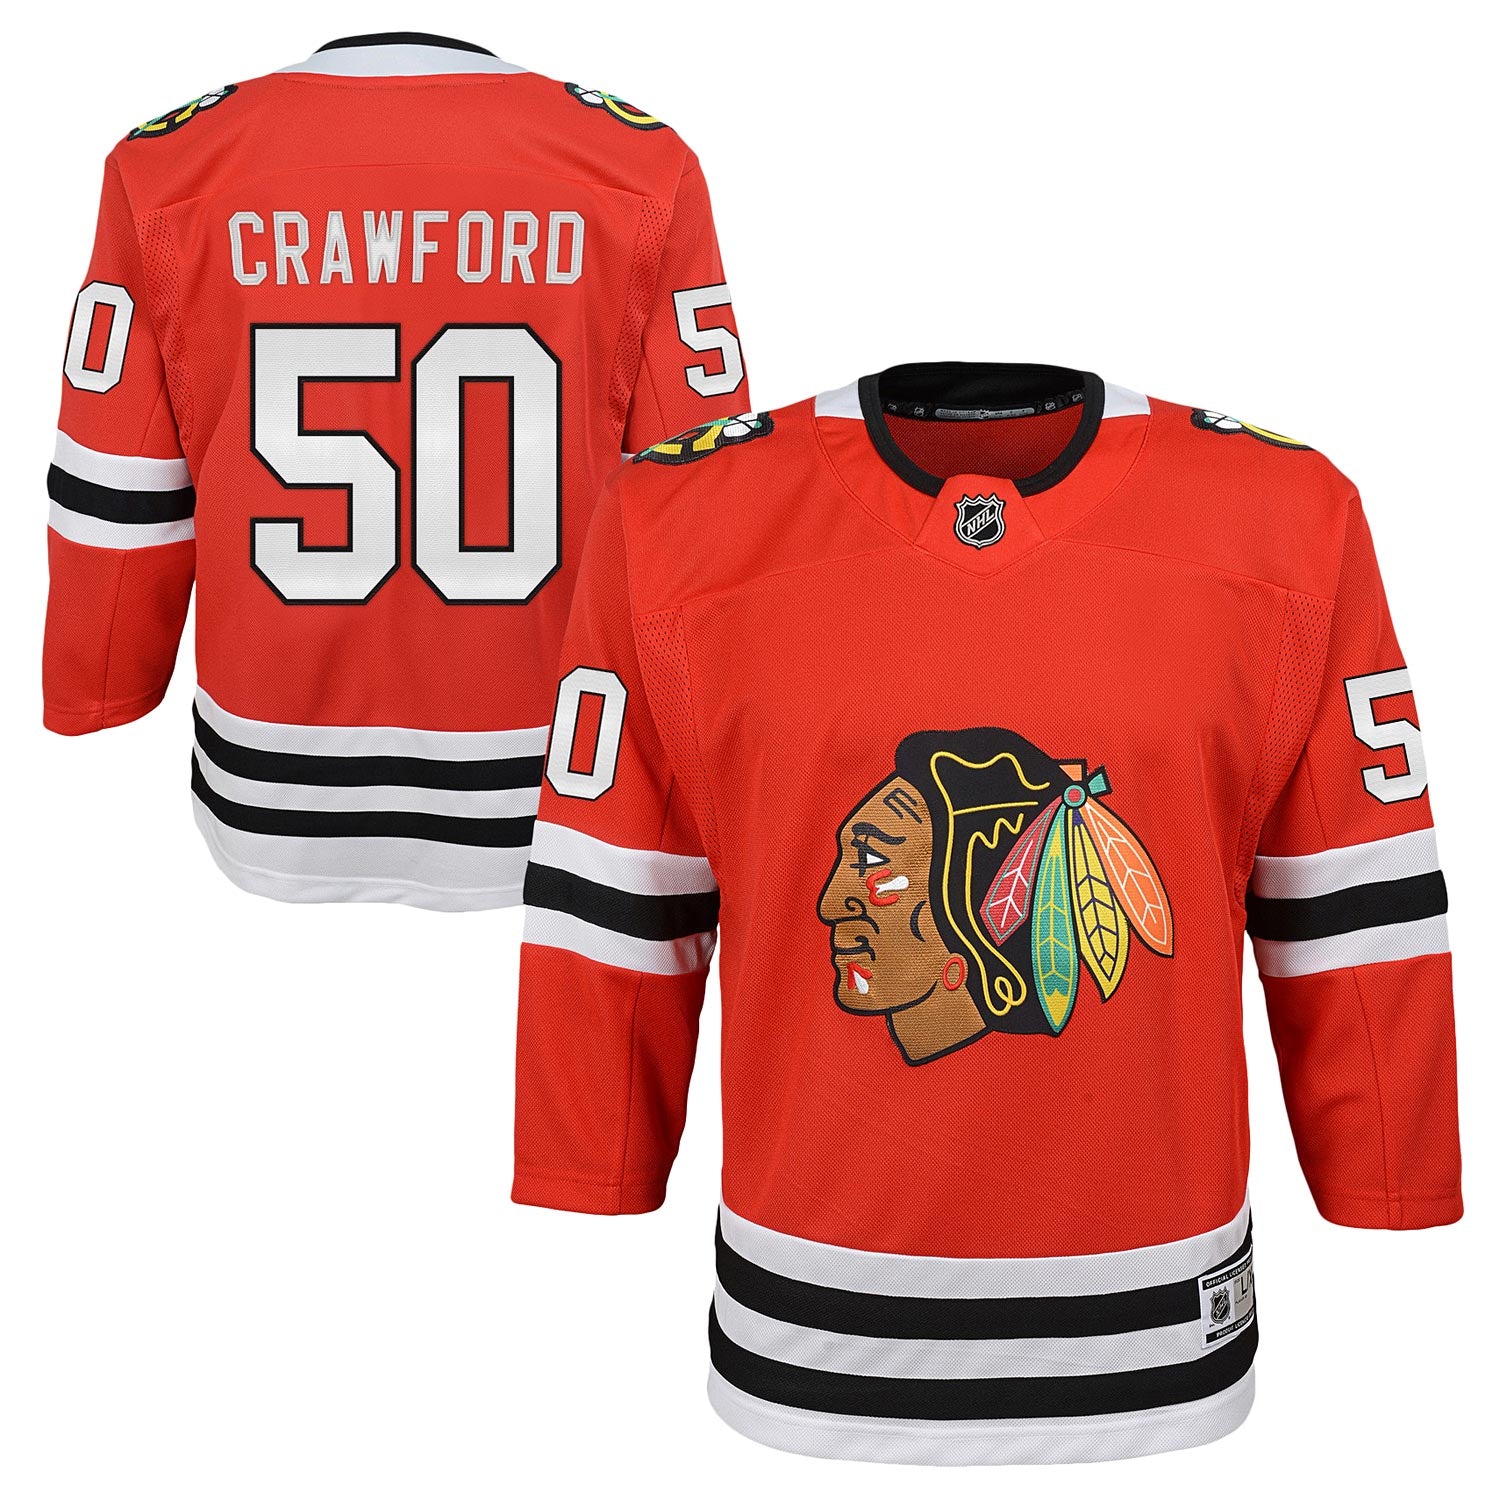 Vintage CCM Chicago Blackhawks Hockey Jersey Sweatshirt Size L EUC